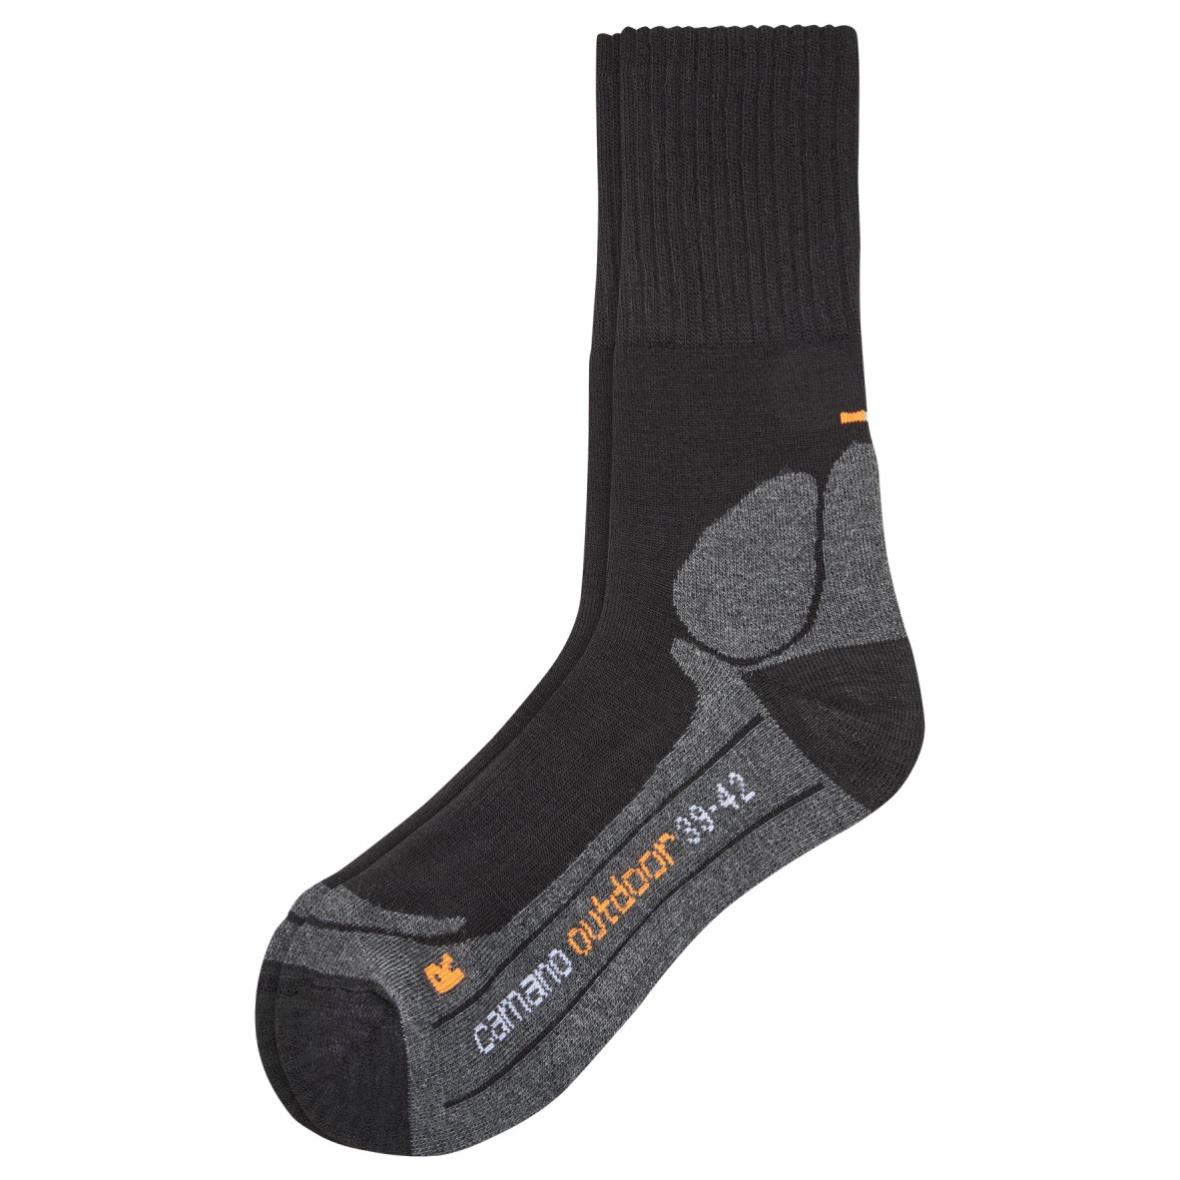 Camano Unisex All Mountain Outdoor Online-Shop - Siemers Paar Socks 1